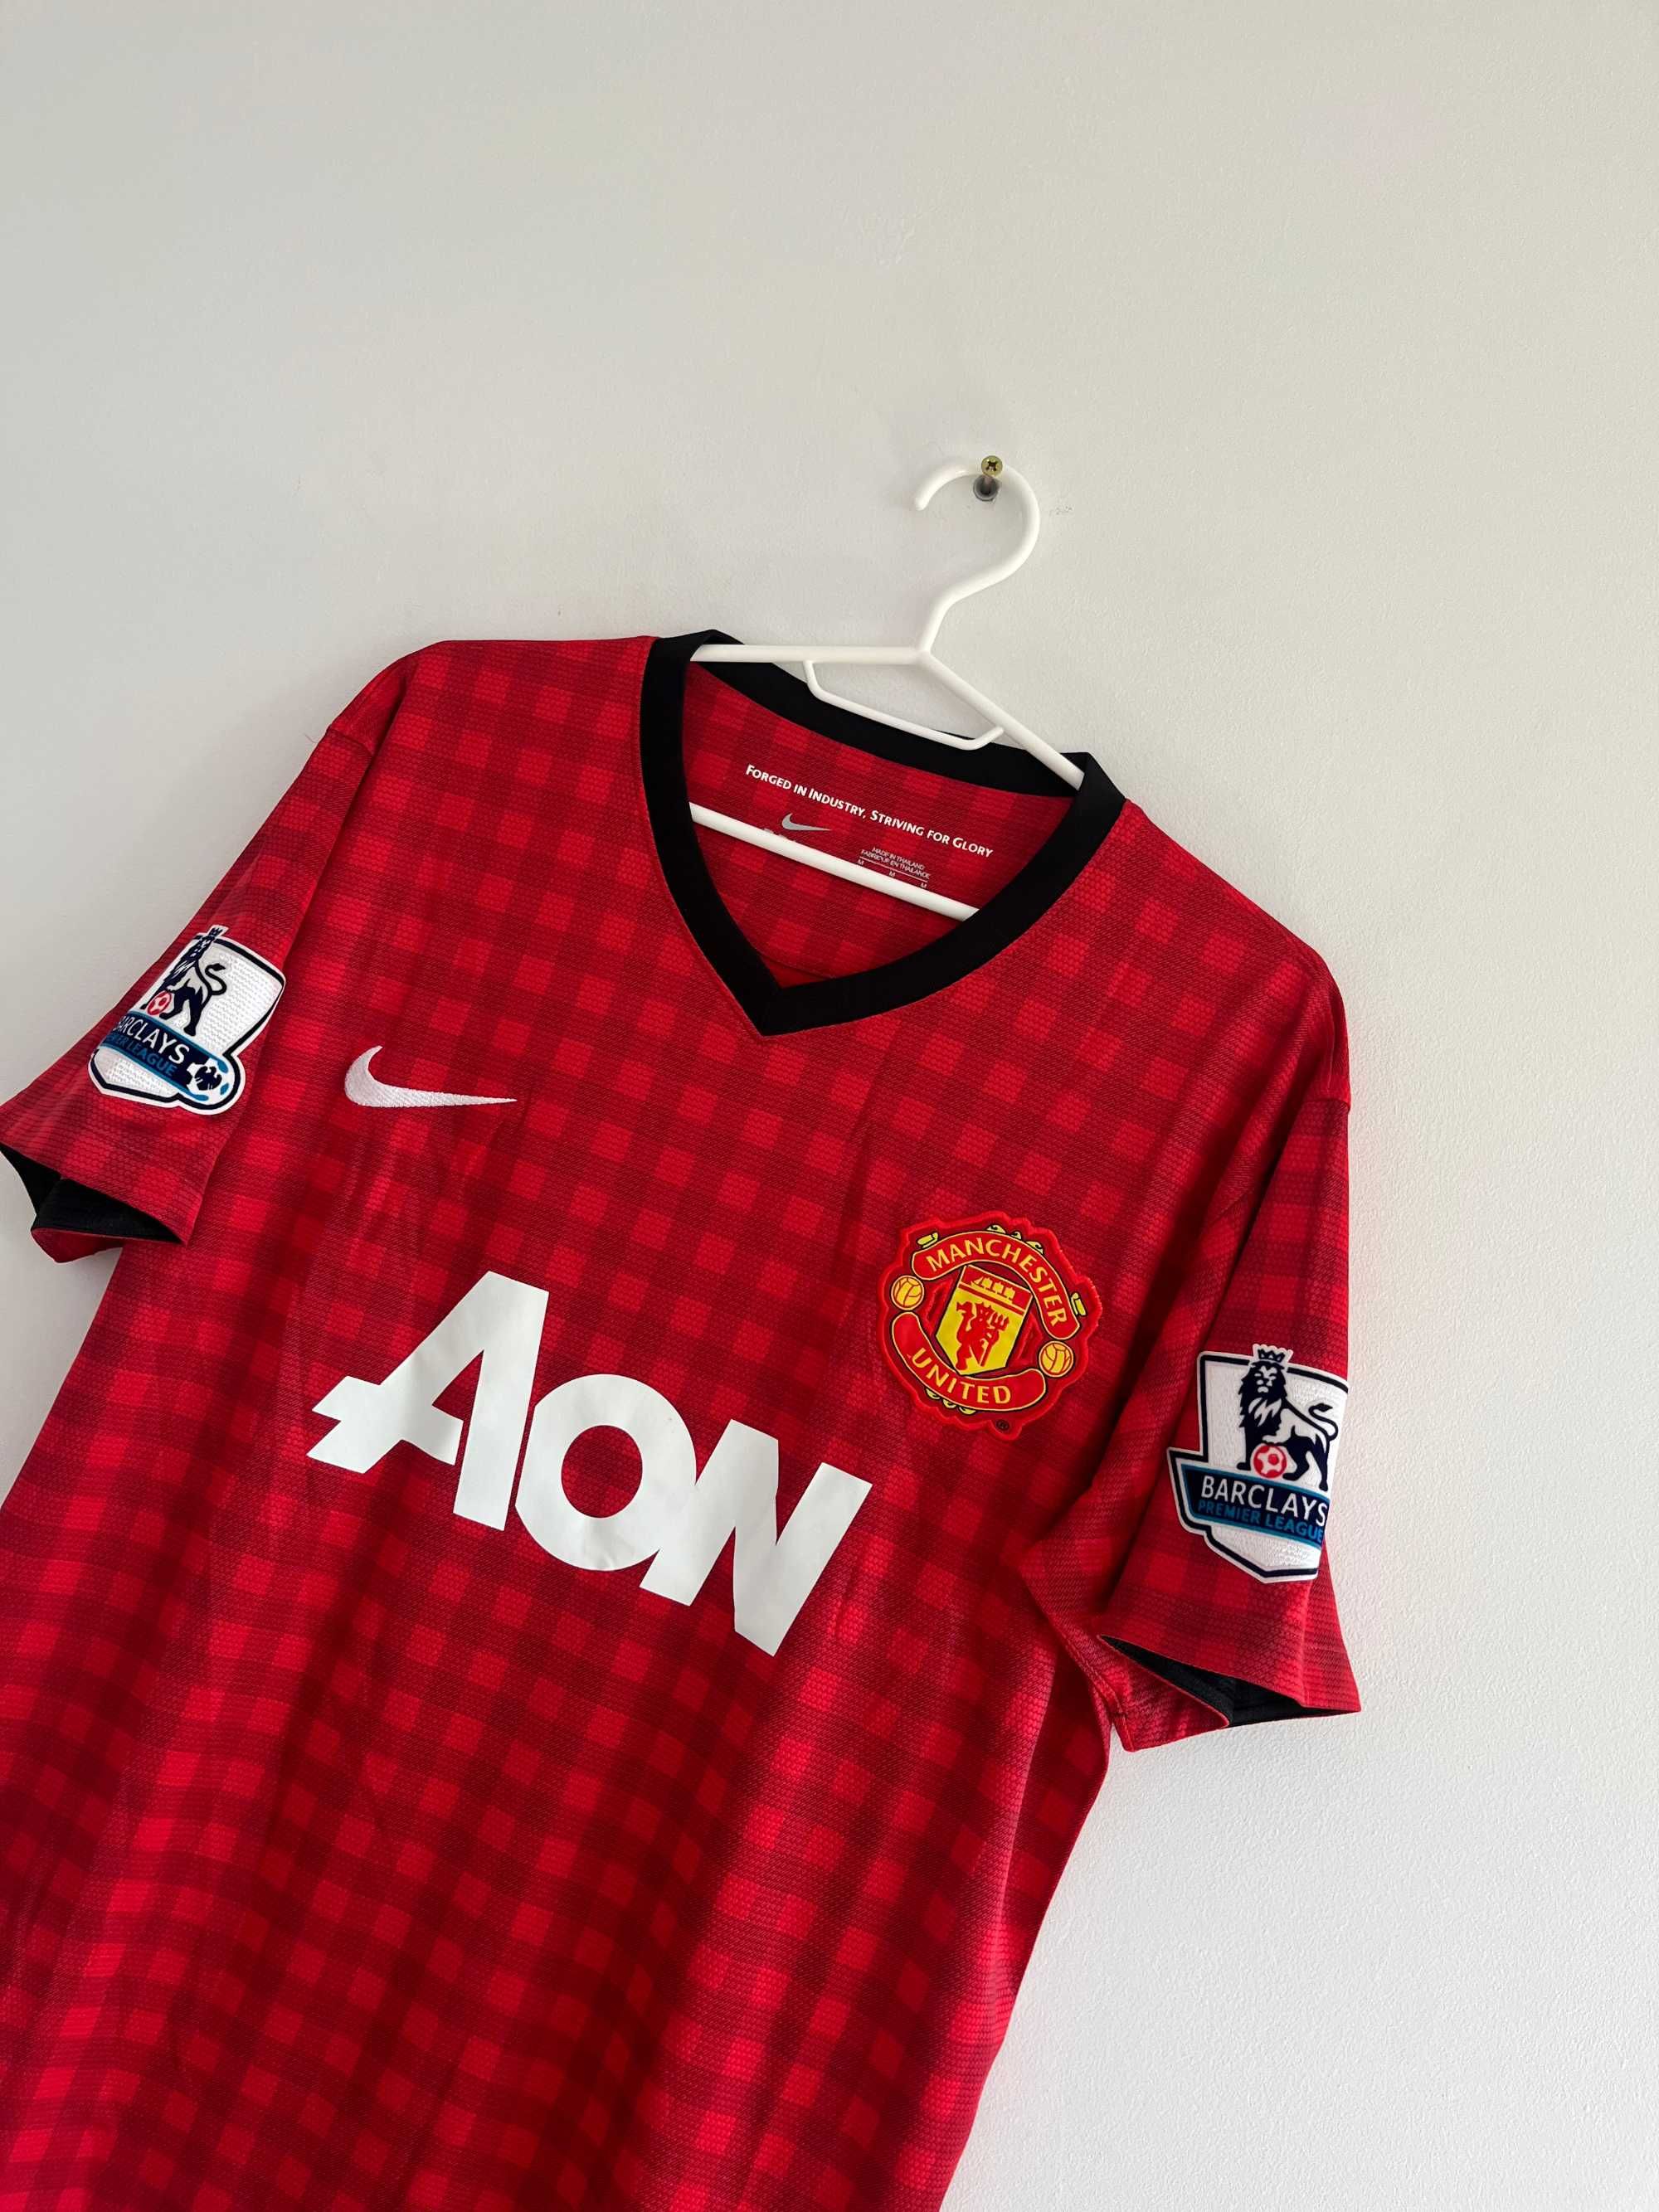 Vintage Koszulka Piłkarska Nike Manchester United Wayne Rooney M